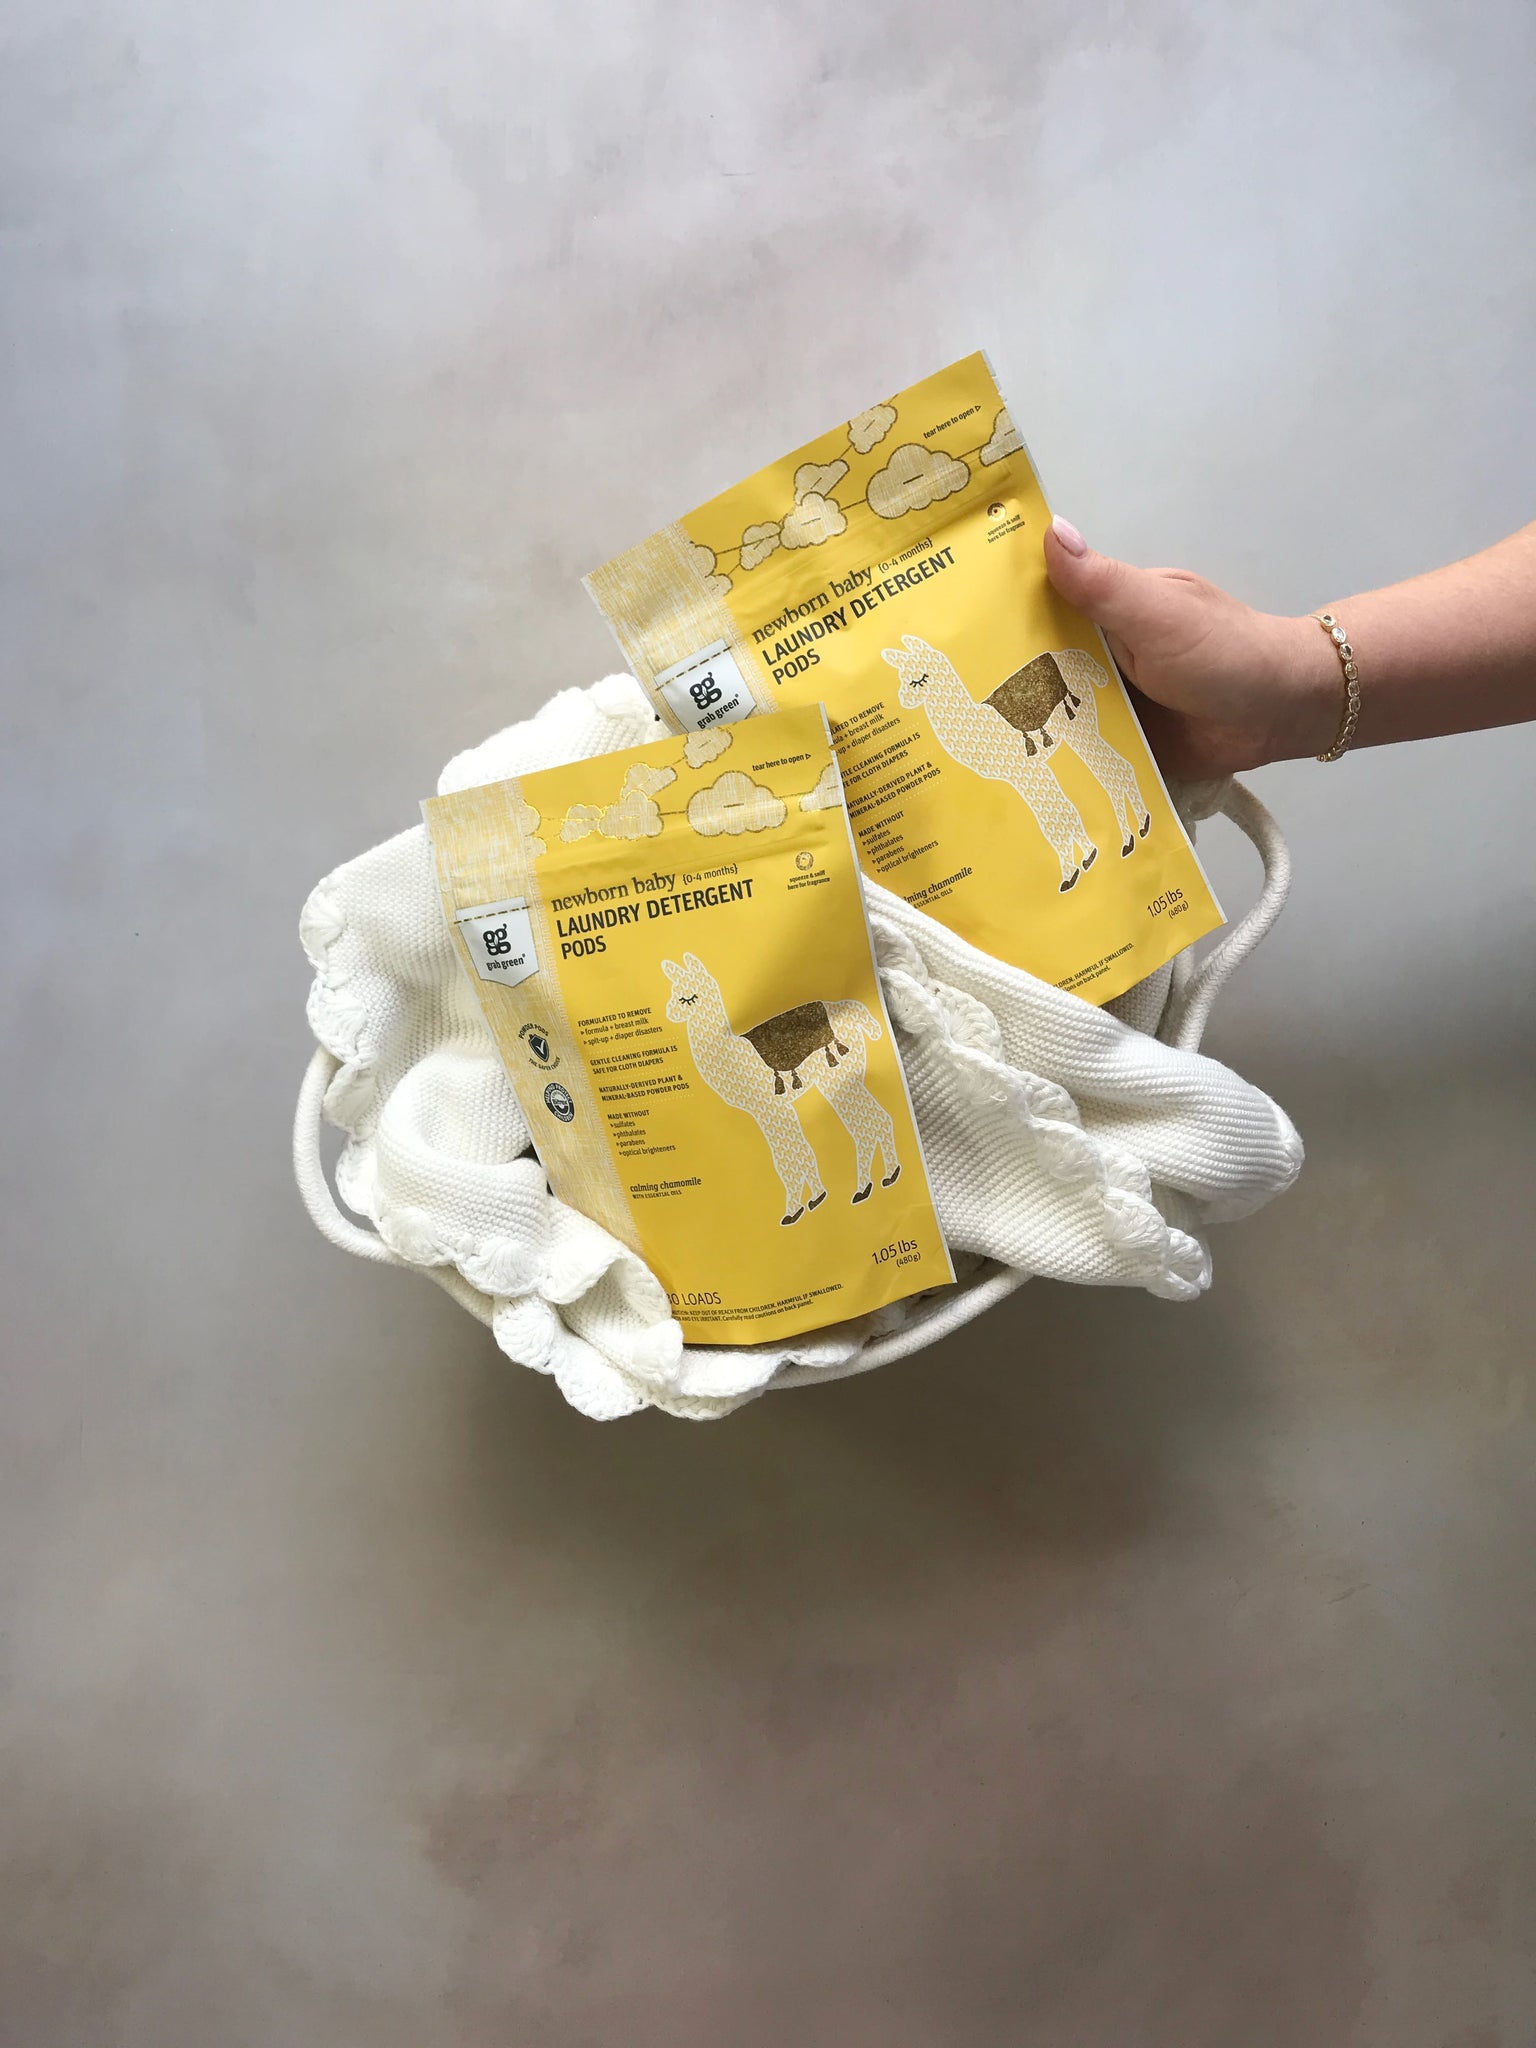 Newborn Baby Laundry Detergent Pods - 2 pack